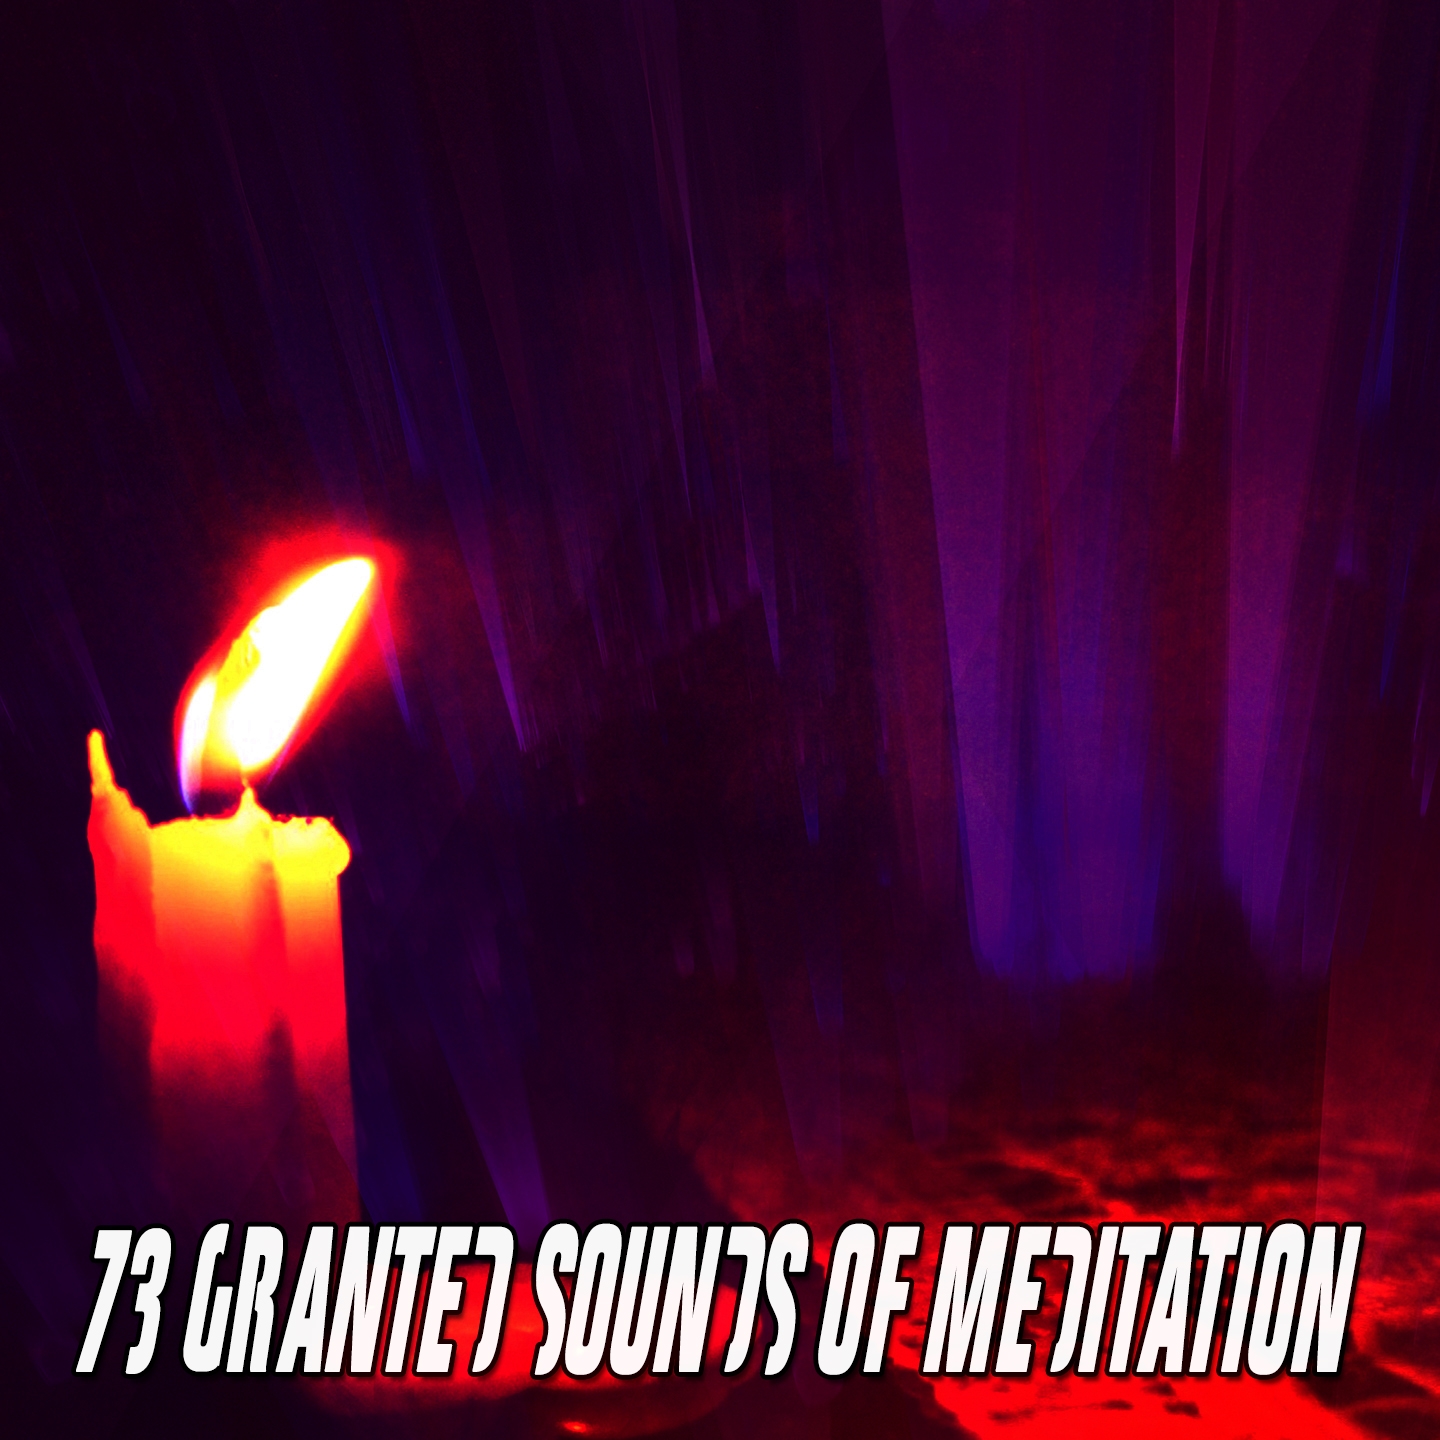 73 Granted Sounds Of Meditation